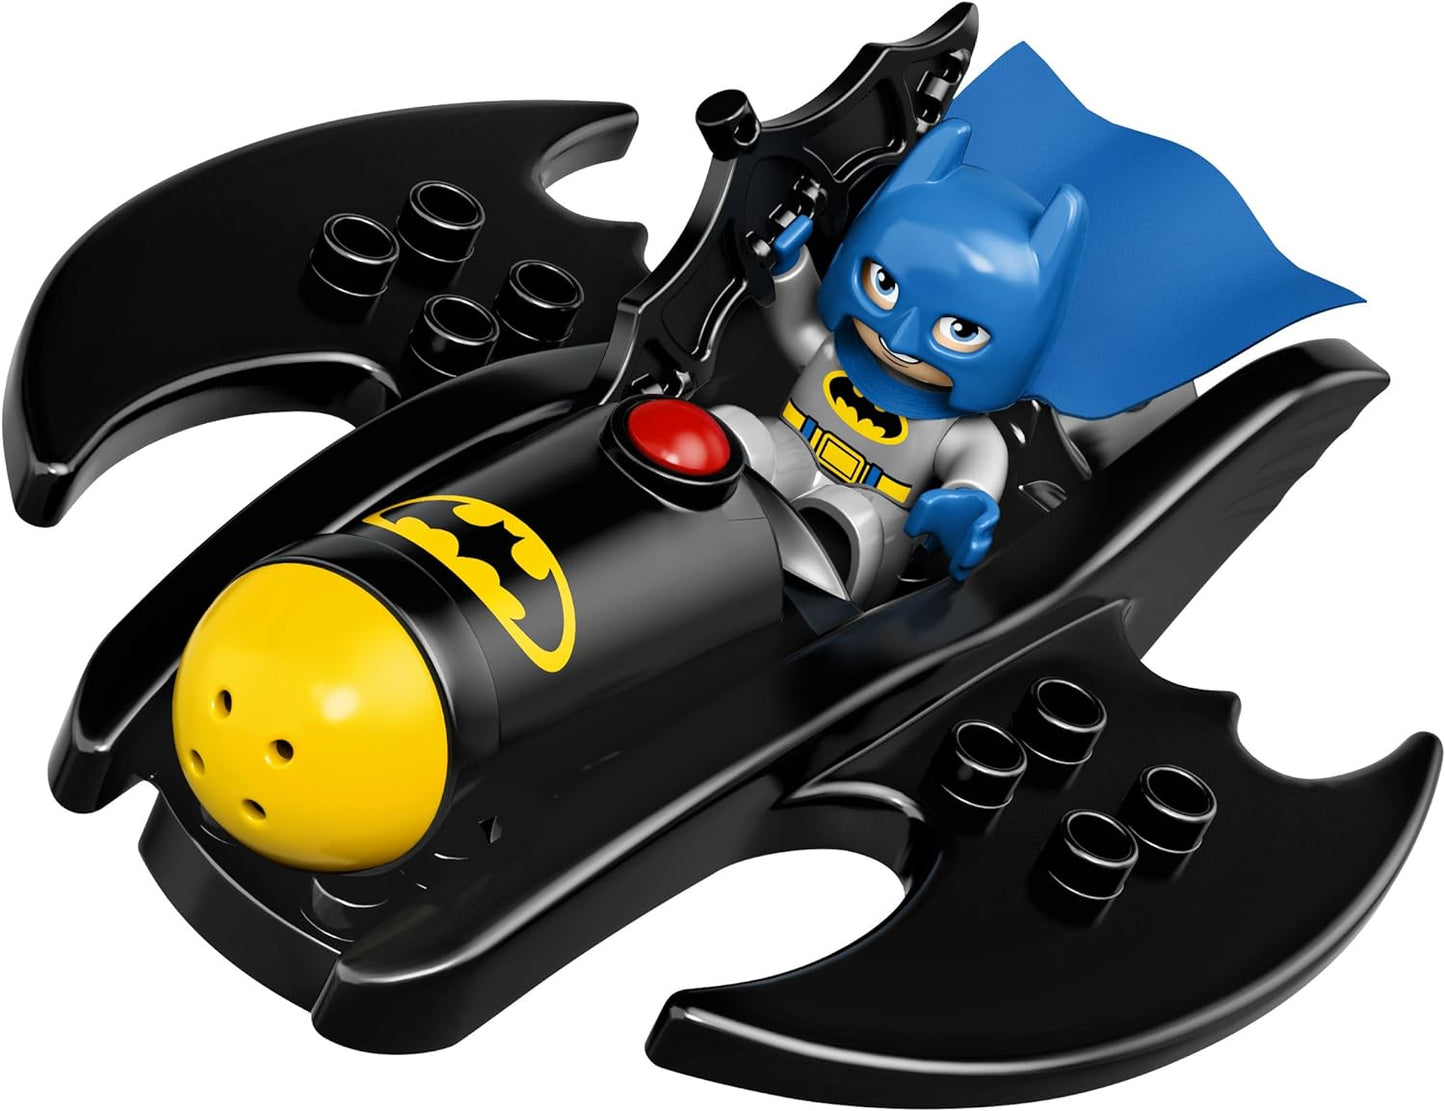 LEGO DUPLO DC Comics Super Heroes Batman Batwing Adventure 10823, Preschool, Pre-Kindergarten, Large Building Block Toys for Toddlers